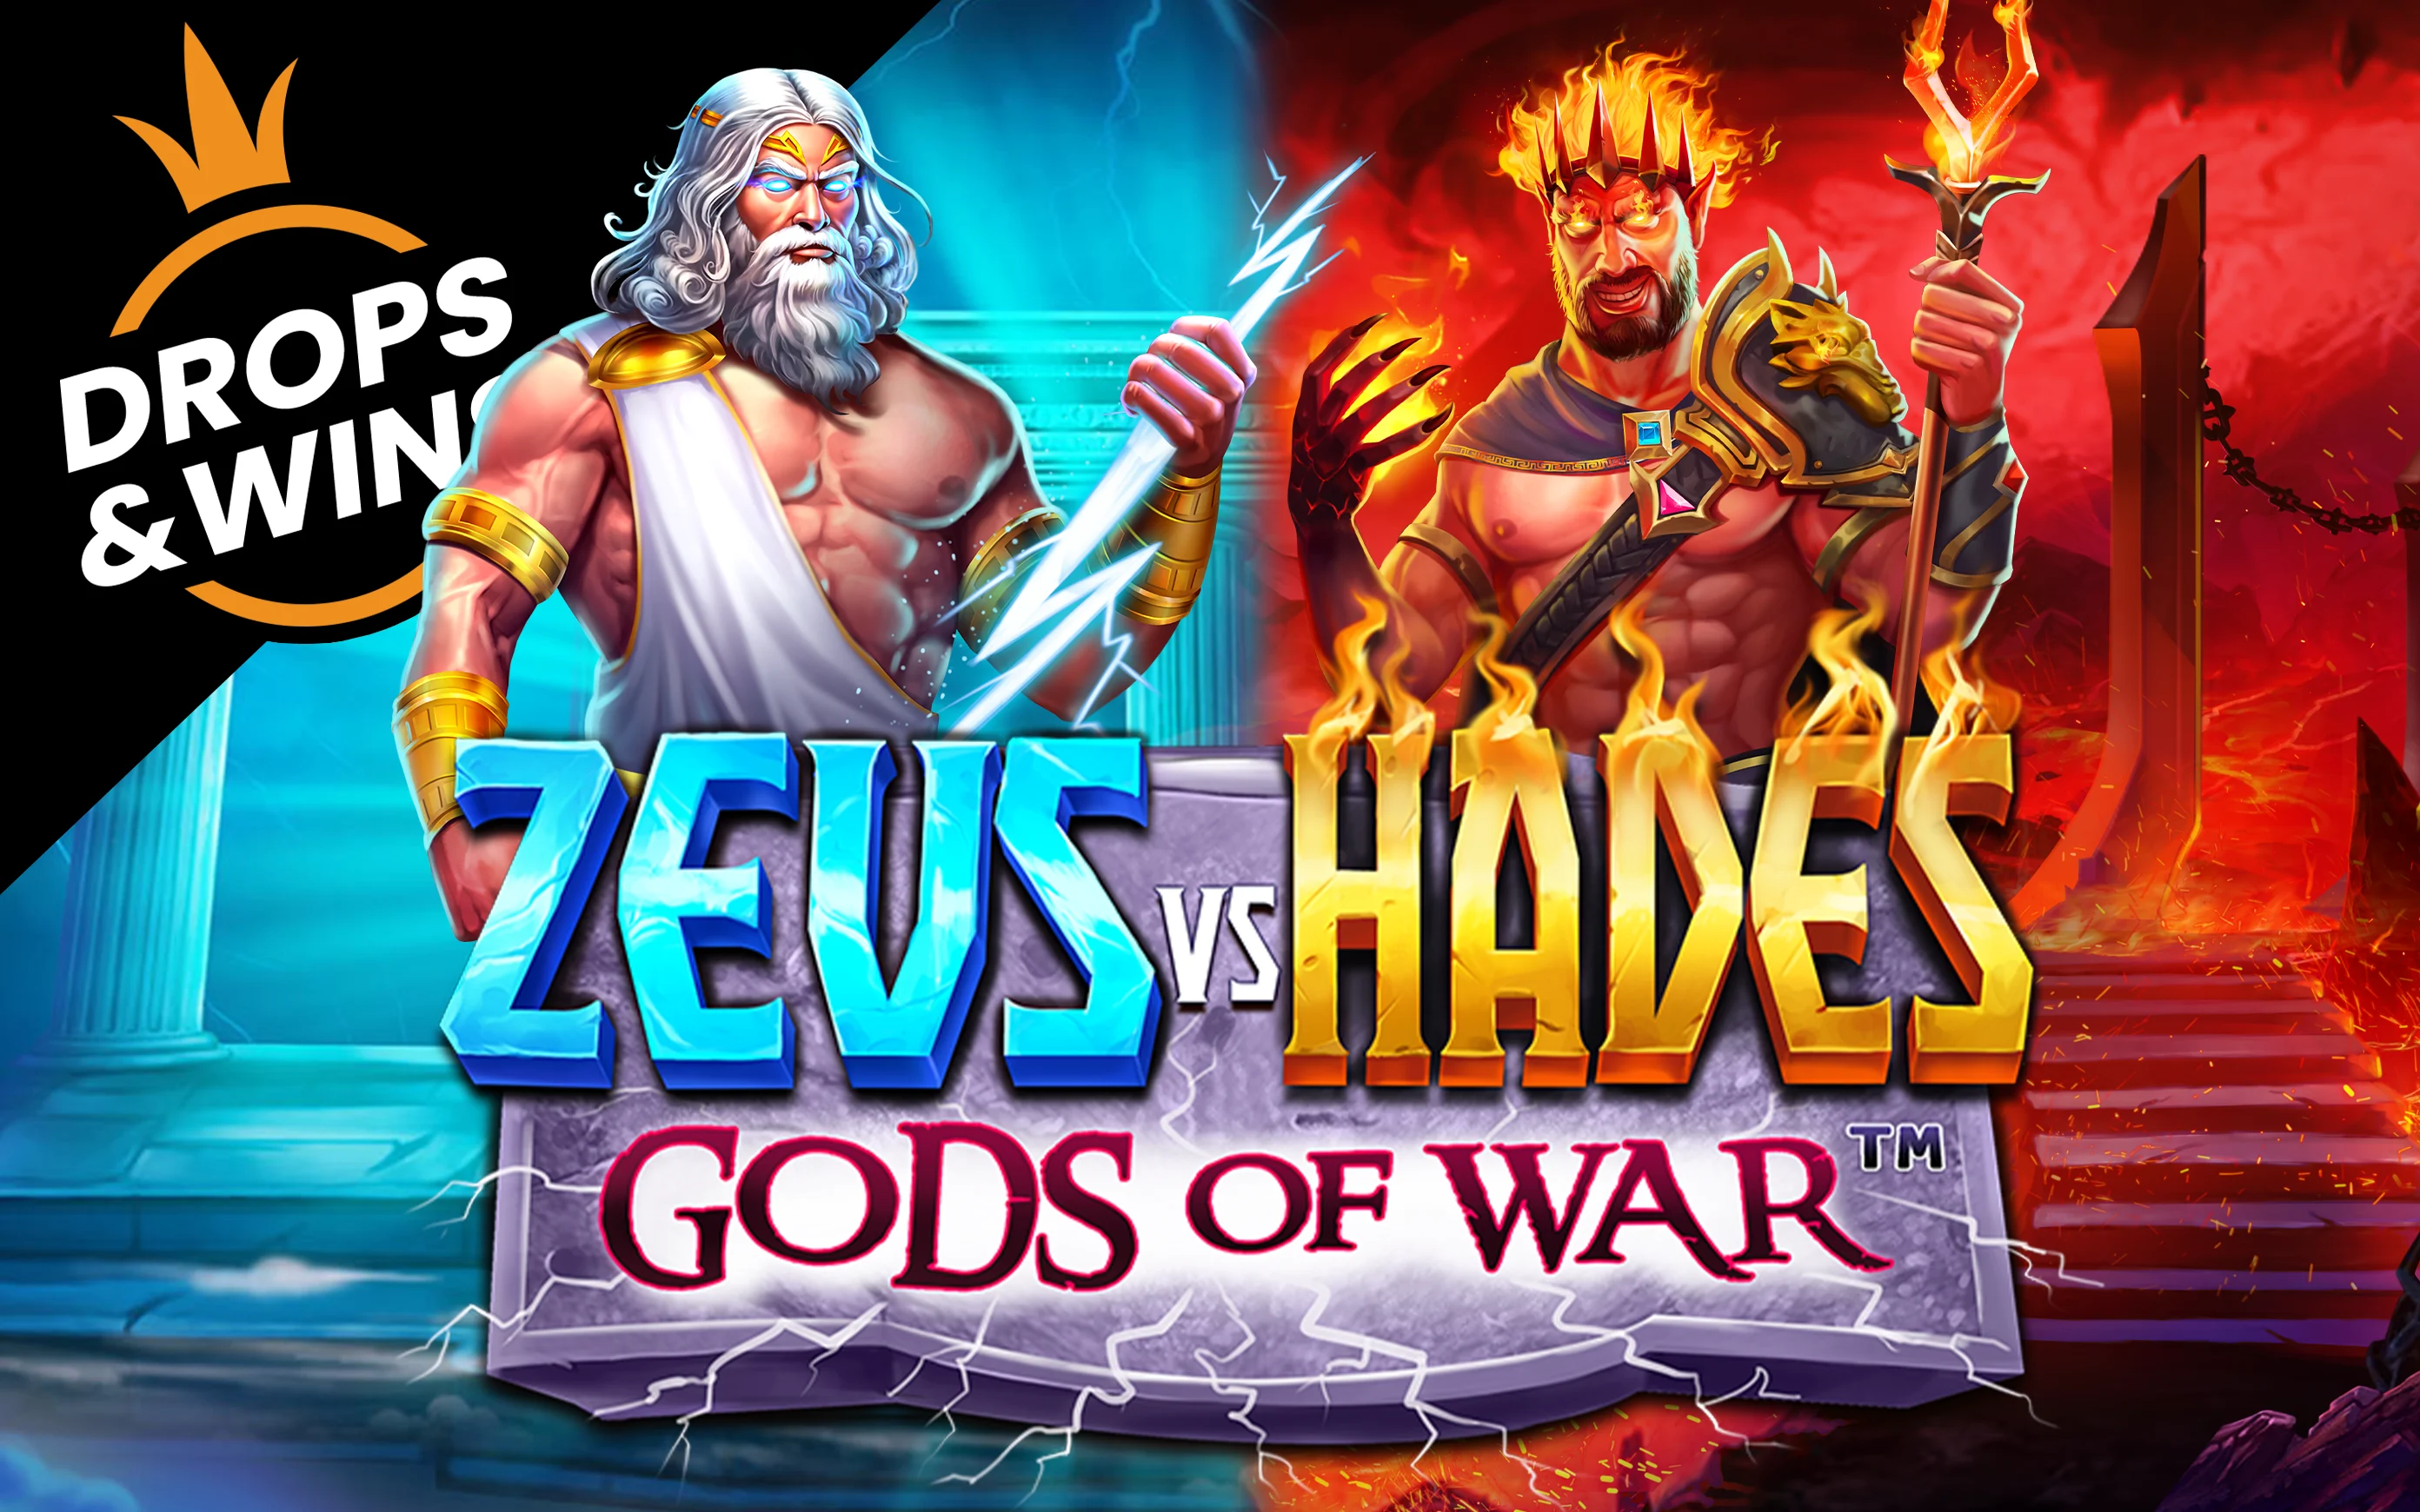 Play Zeus vs Hades - Gods of War™ on Starcasino.be online casino